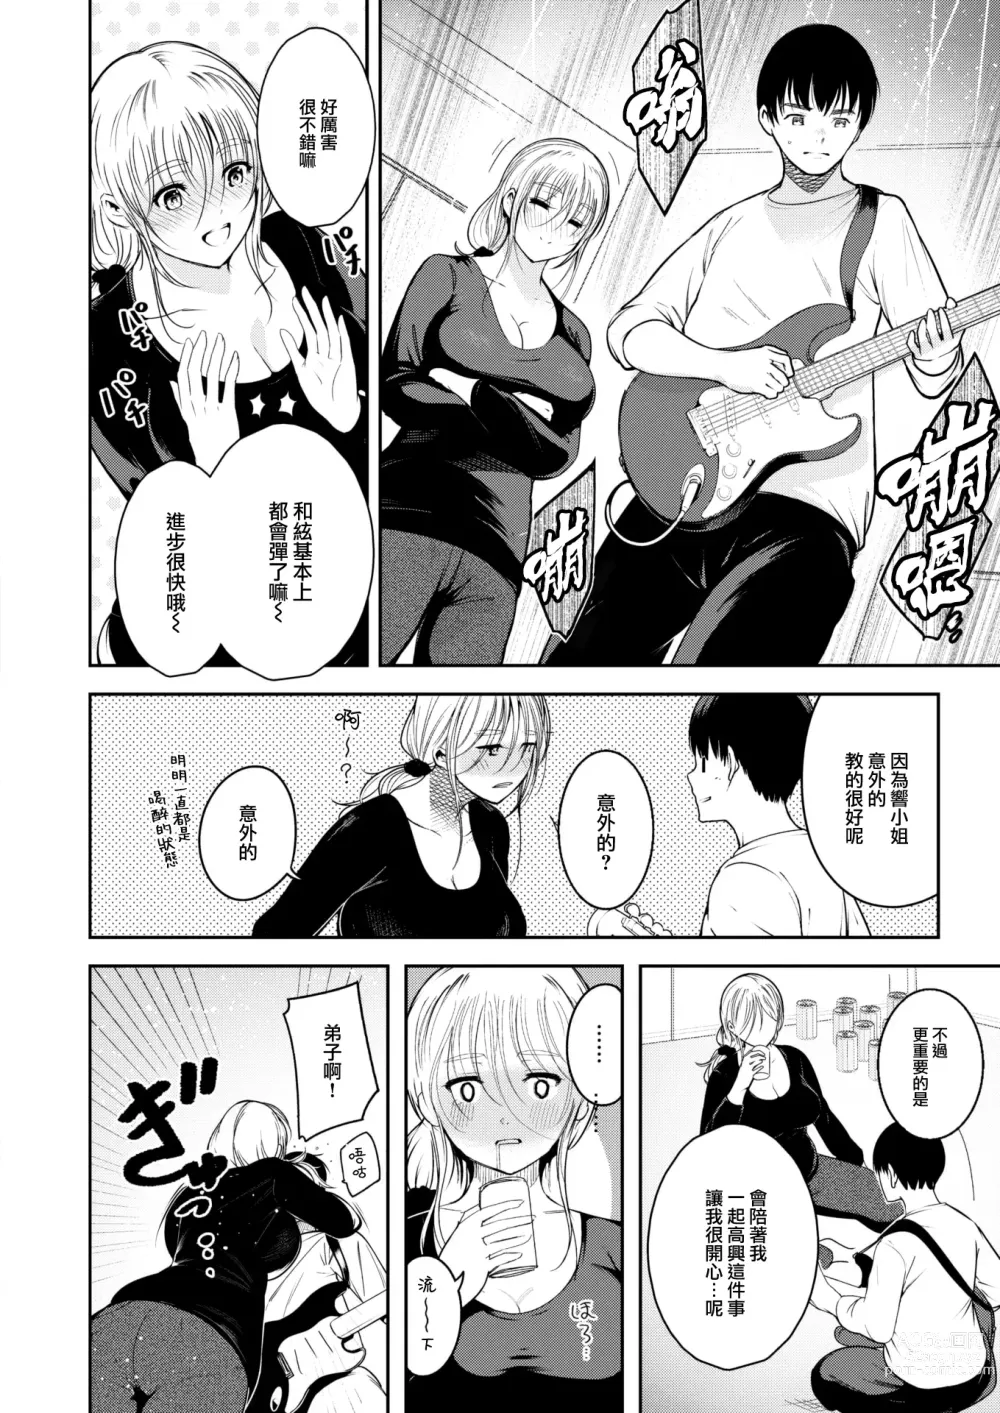 Page 7 of manga RAINY DROP